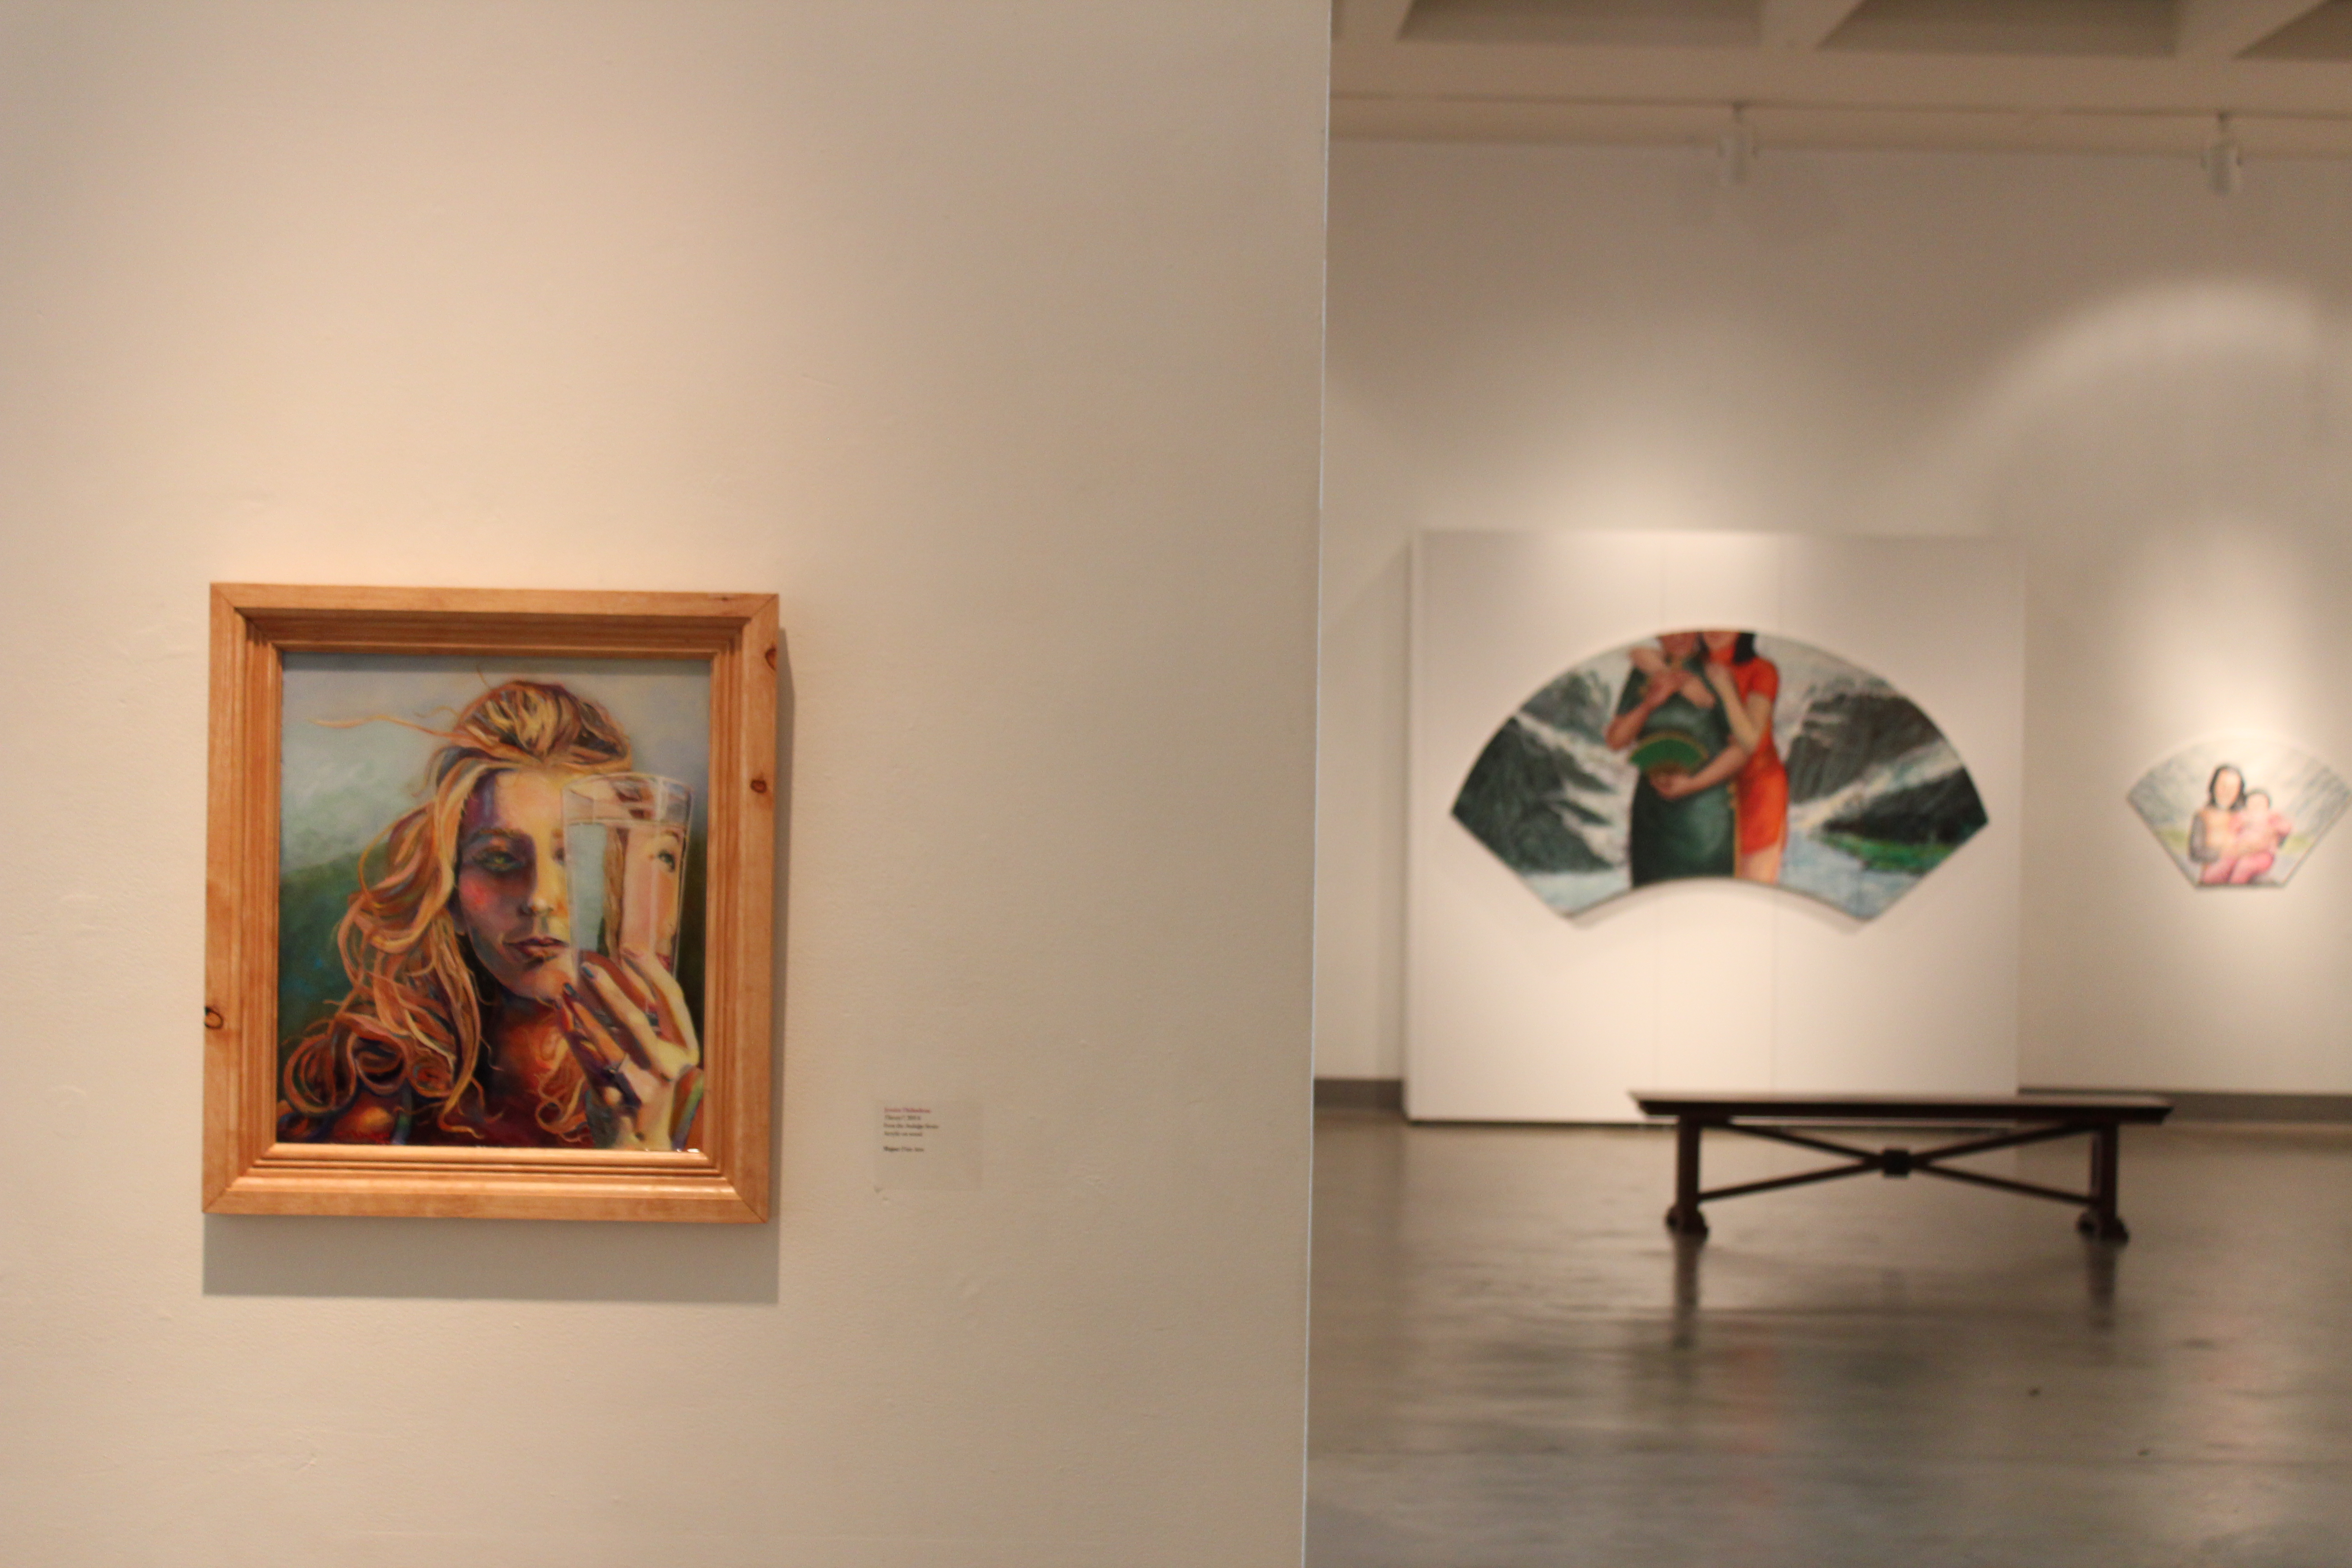 Installation View, Corridor of Gallery, Polykroma 2014 Exhibition, May. 19, 2014 to Jun. 15, 2014.